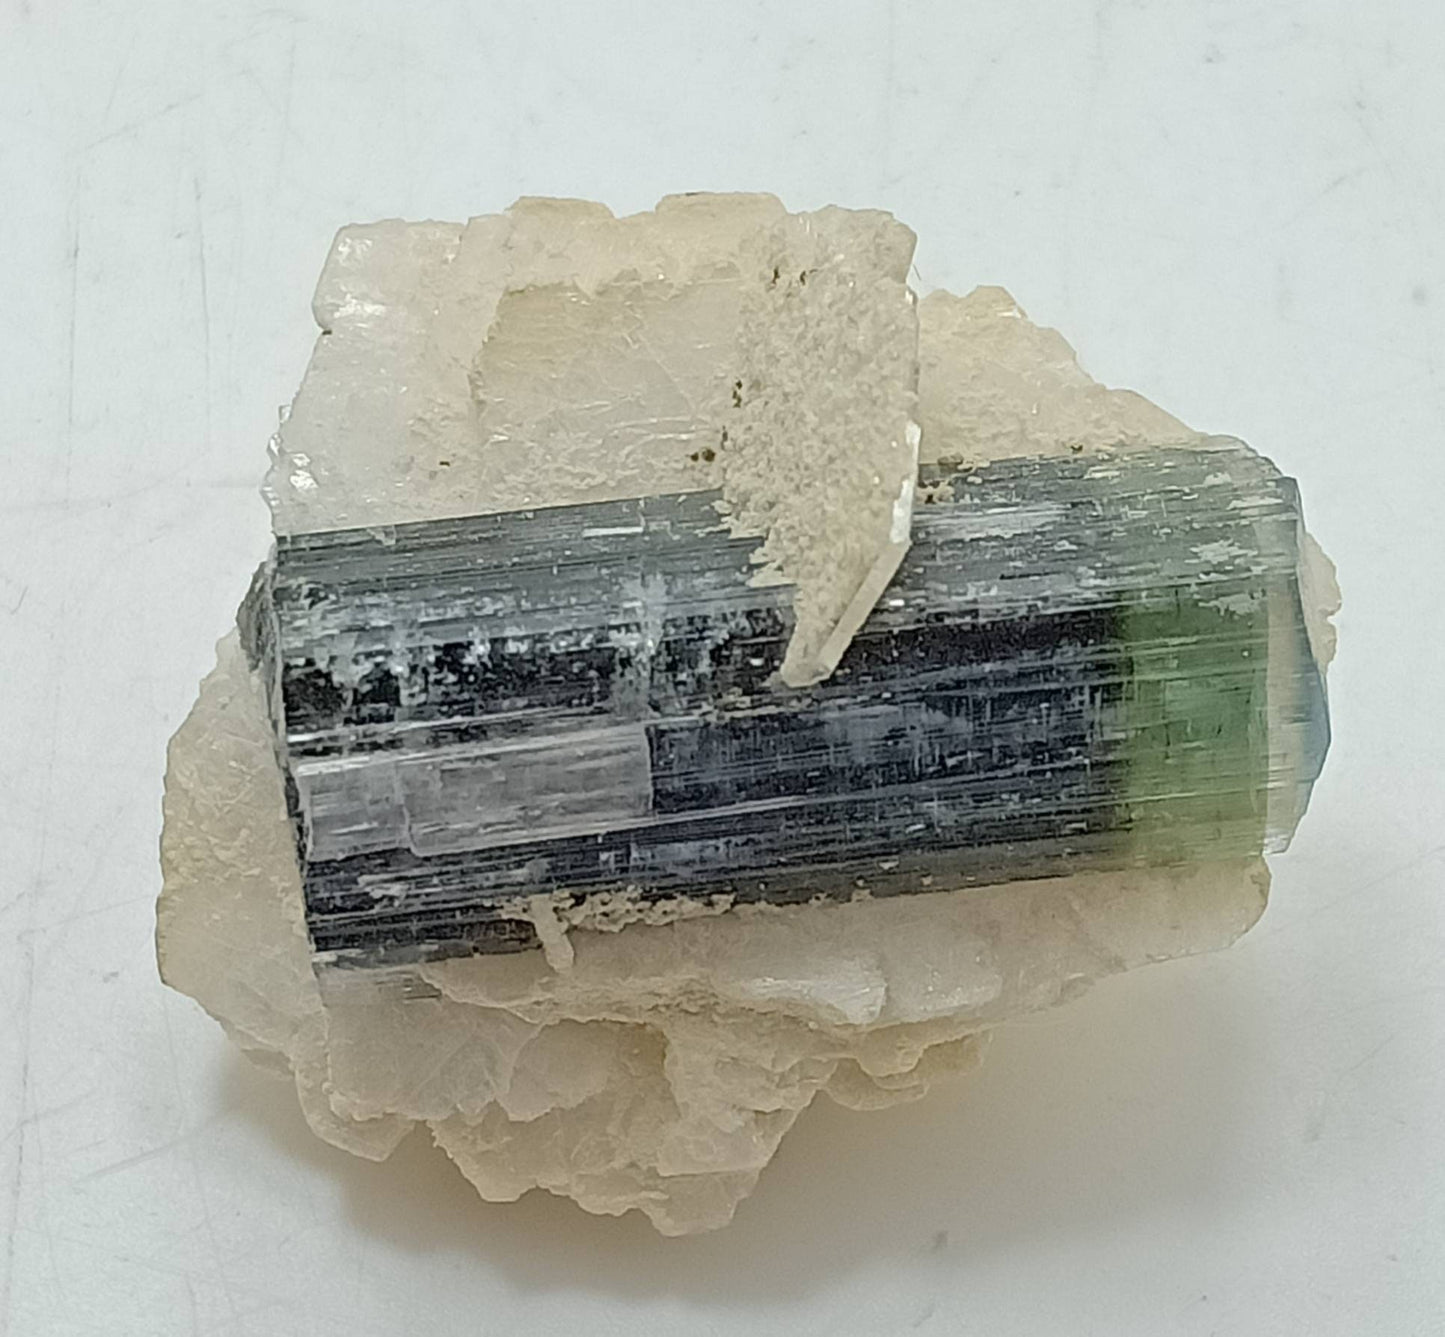 Tricolor Tourmaline crystal on matrix of Albite 14 grams